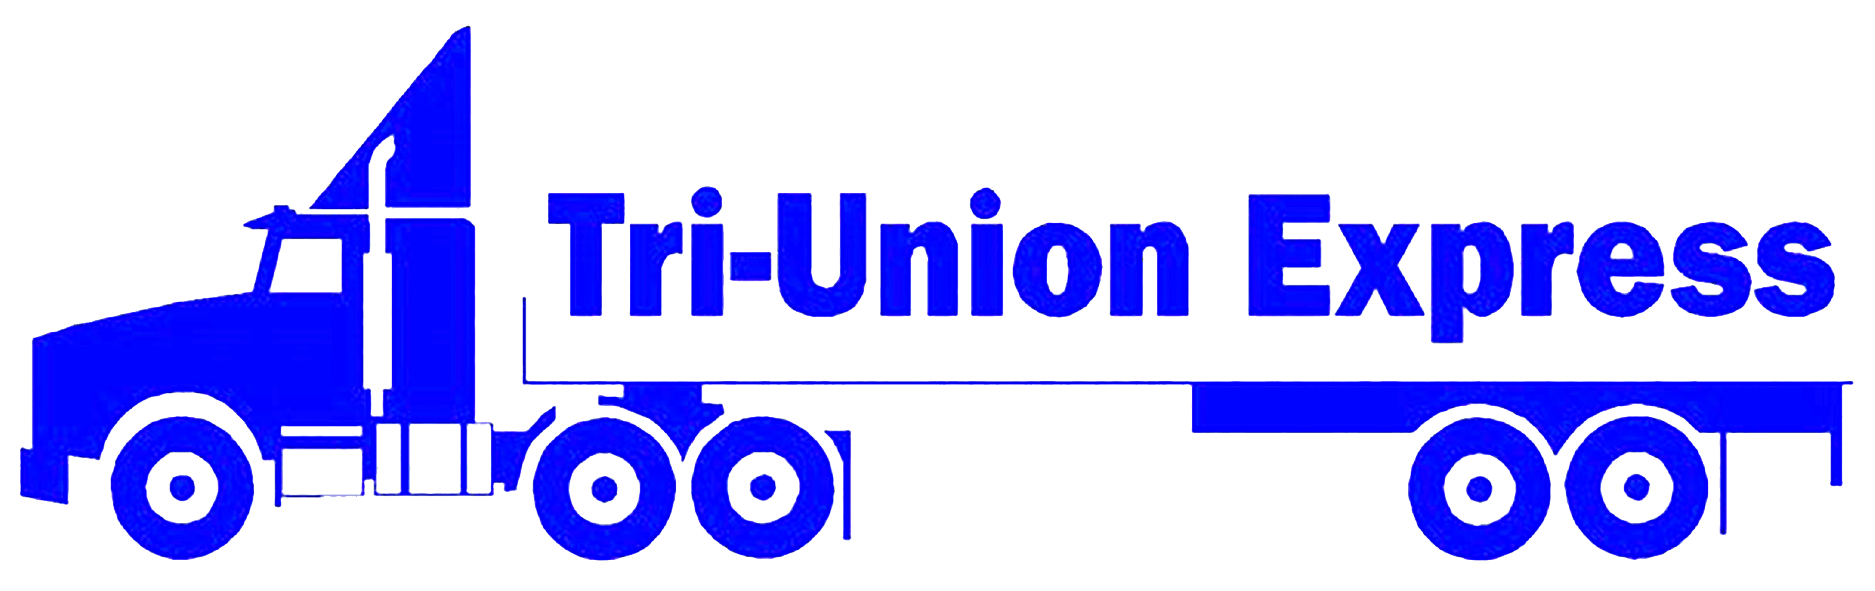 Tri Union Express, Inc.